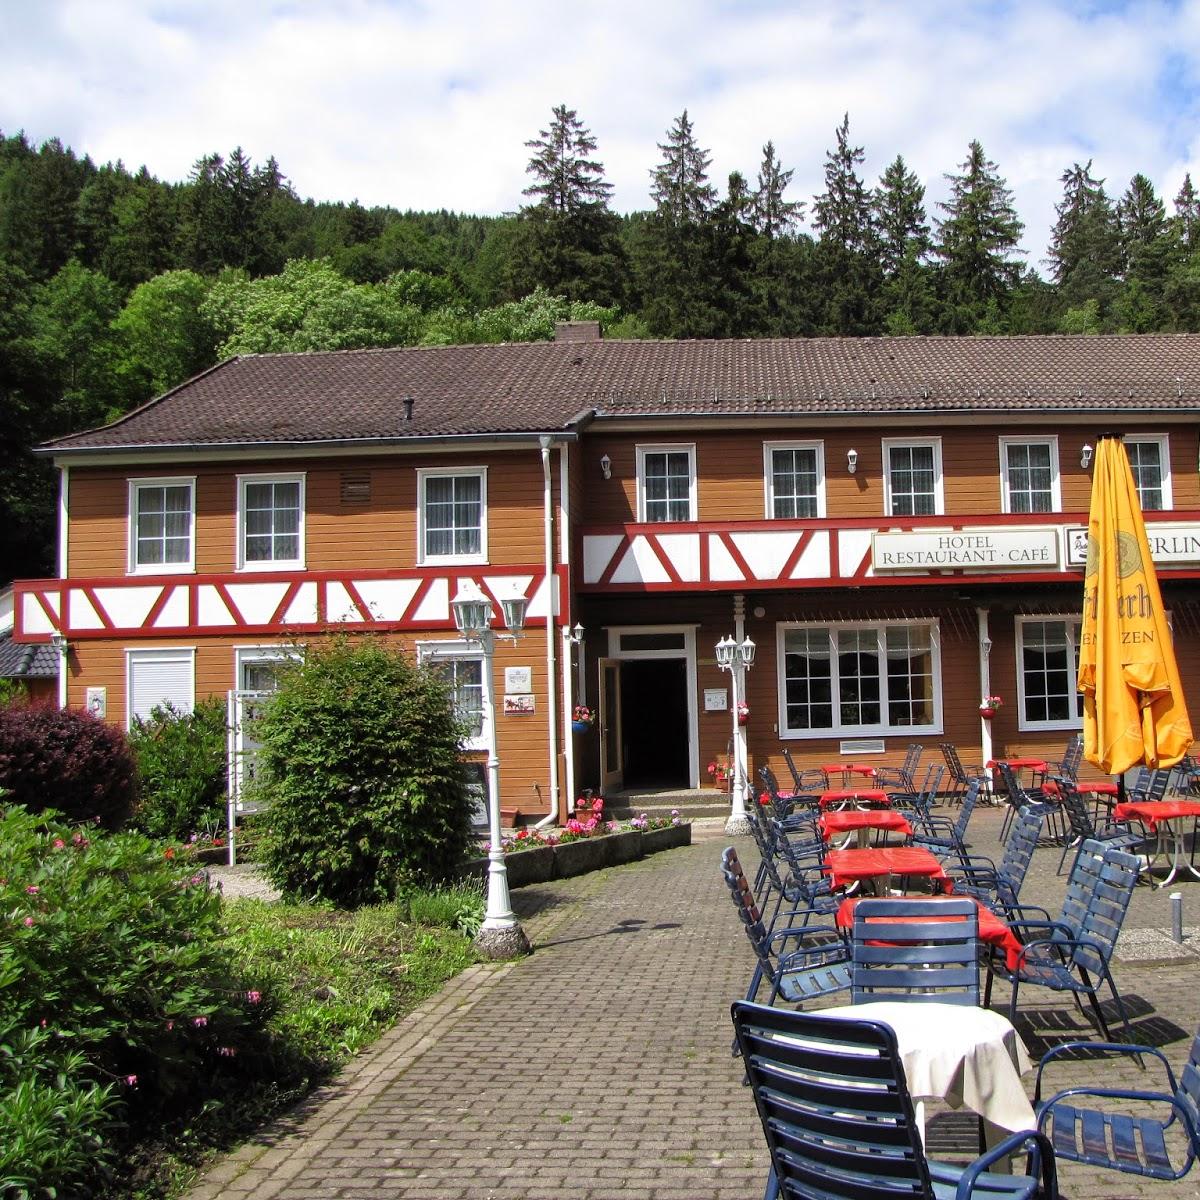 Restaurant "Hotel Berliner Bär" in Langelsheim